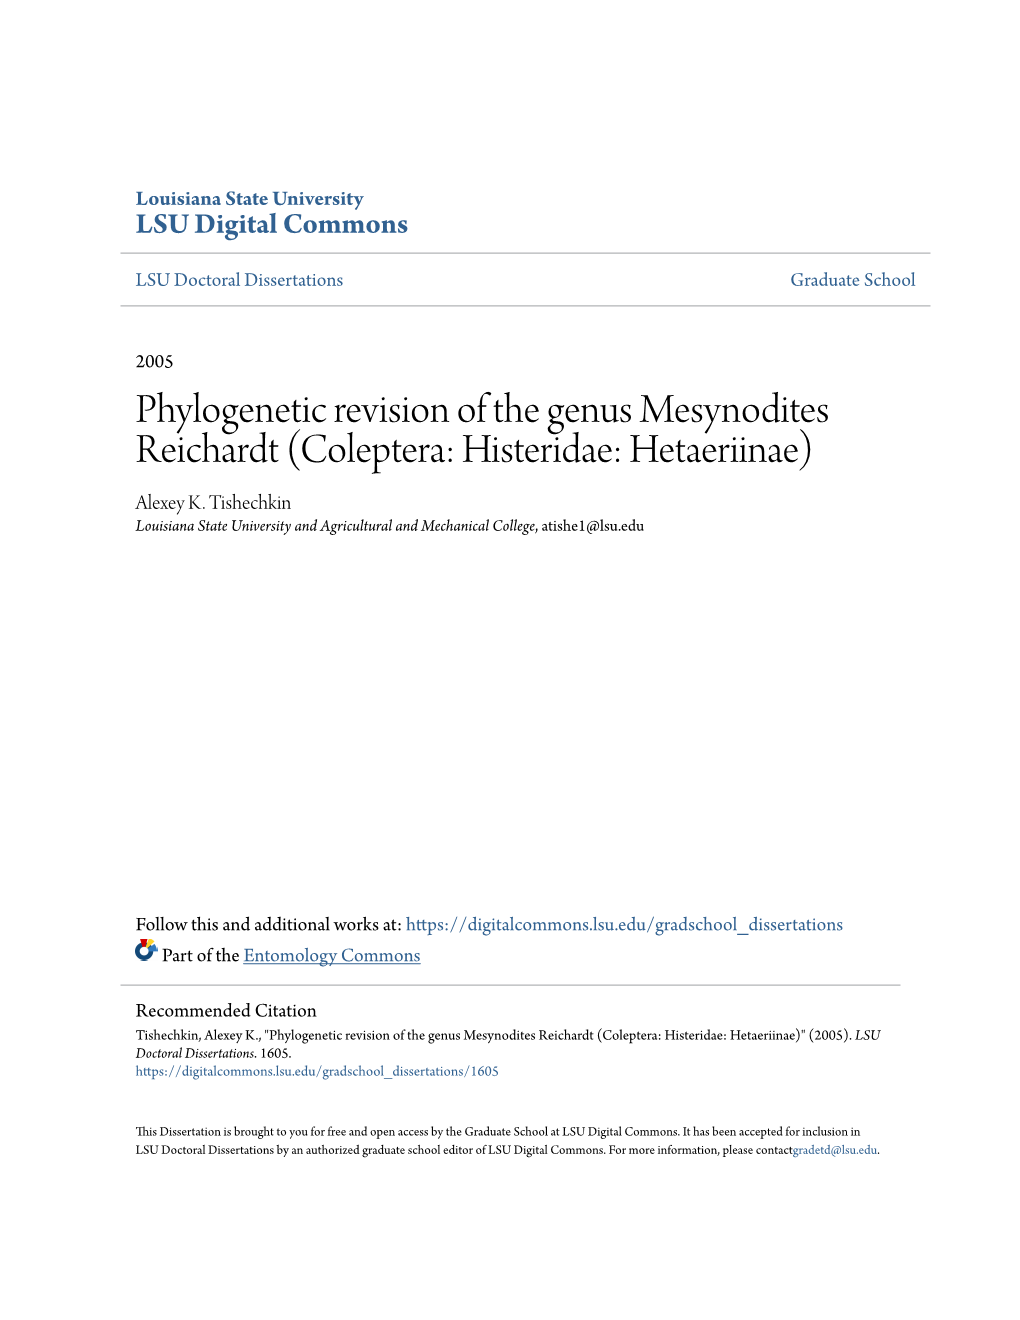 Phylogenetic Revision of the Genus Mesynodites Reichardt (Coleptera: Histeridae: Hetaeriinae) Alexey K